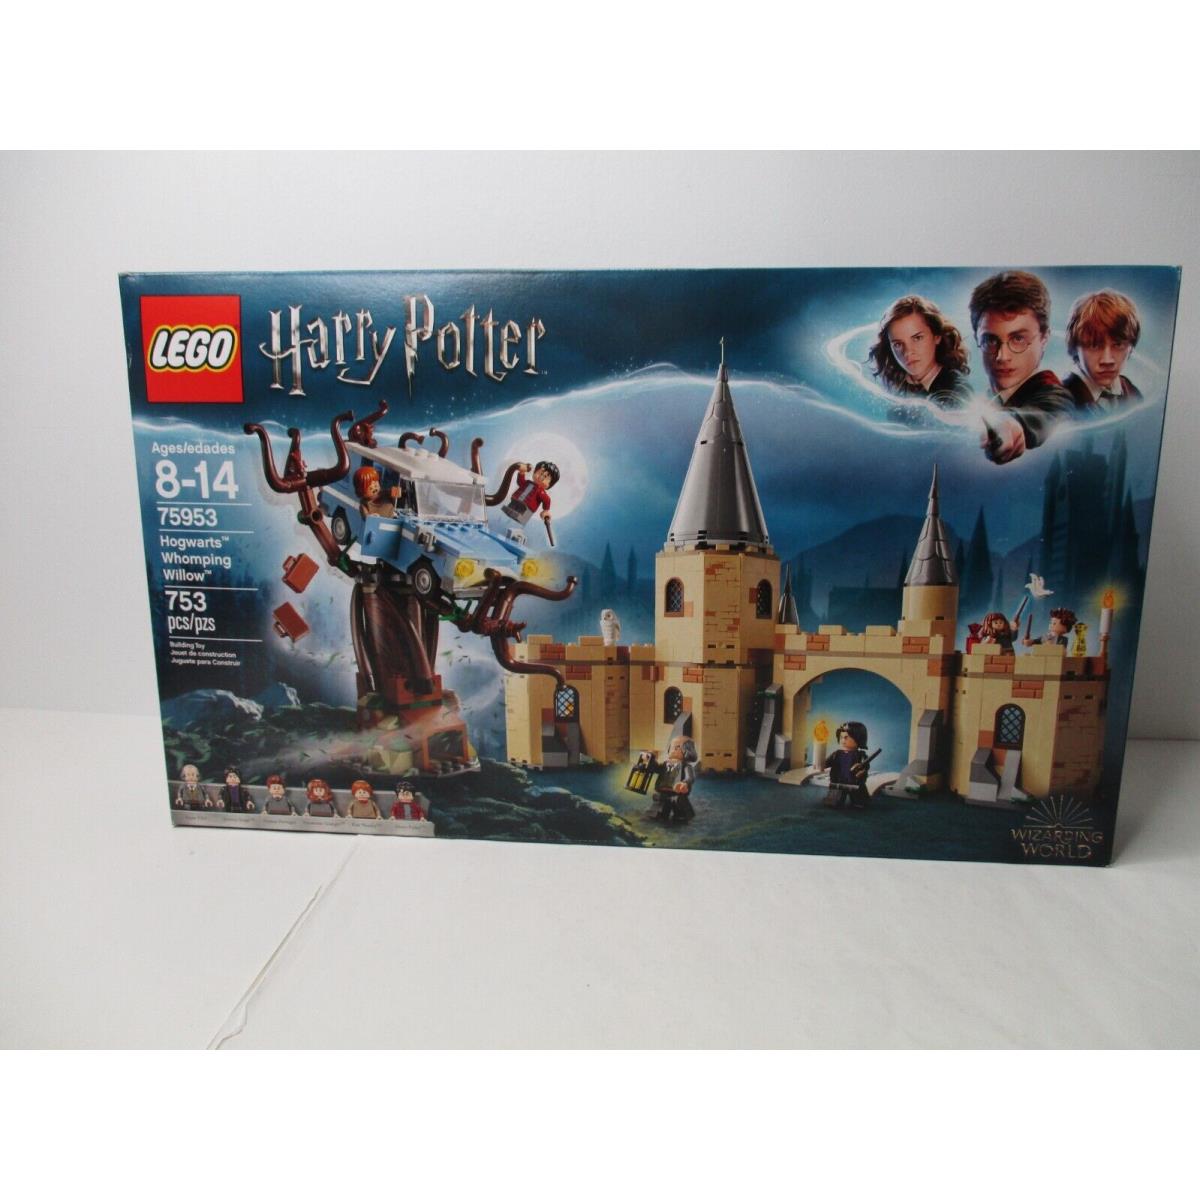 Lego Harry Potter Hogwarts Whomping Willow Set 75953 753 Pcs